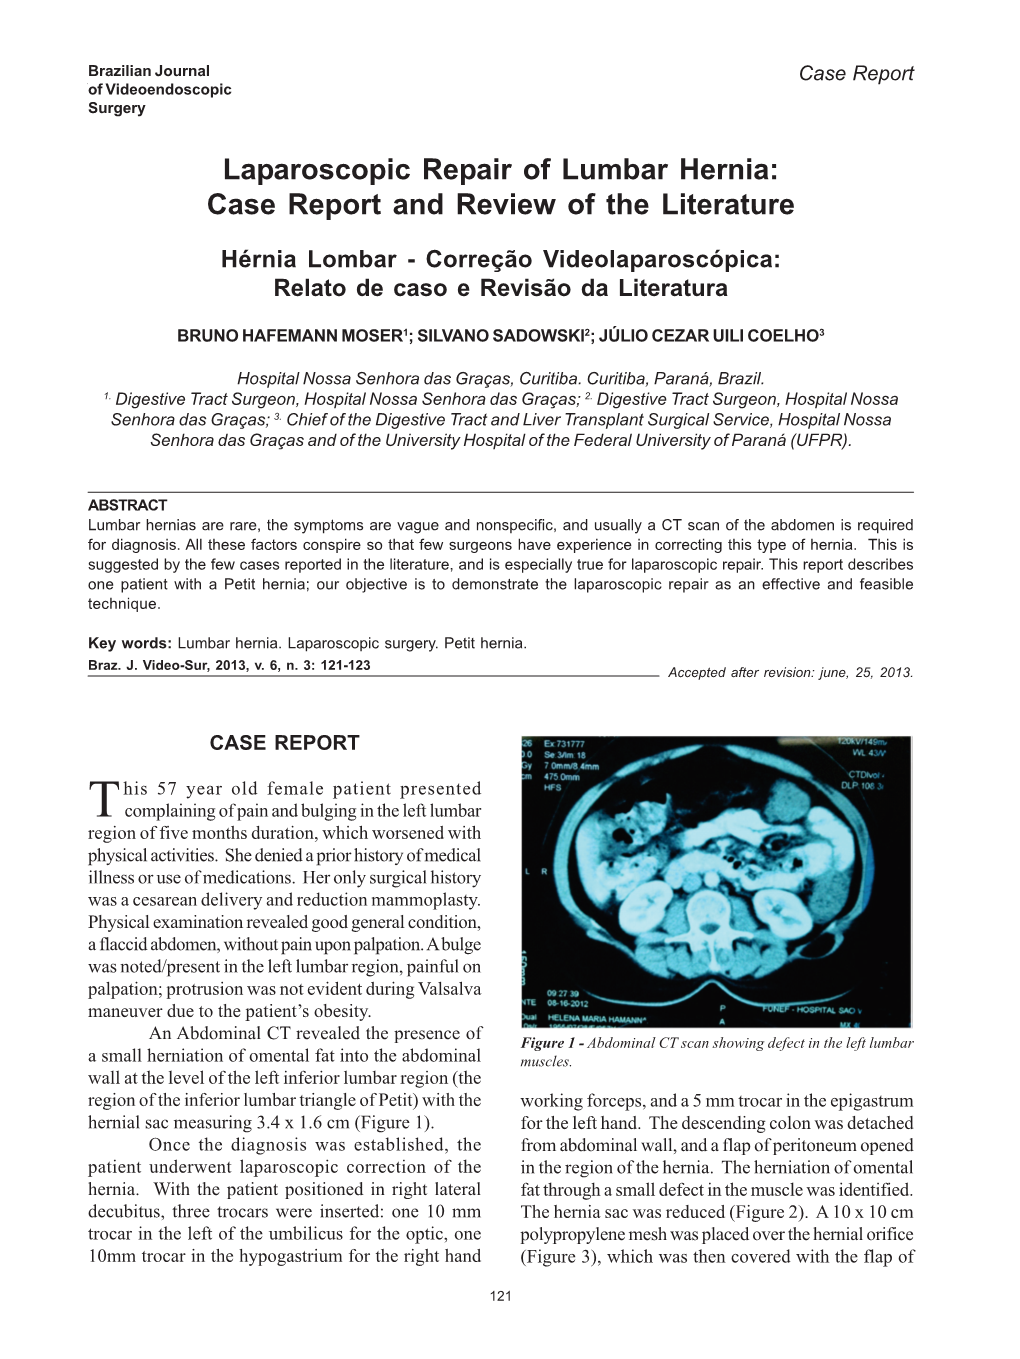 Laparoscopic Repair of Lumbar Hernia: Case Report and Review of the Literature Case Report121 of Videoendoscopic Surgery